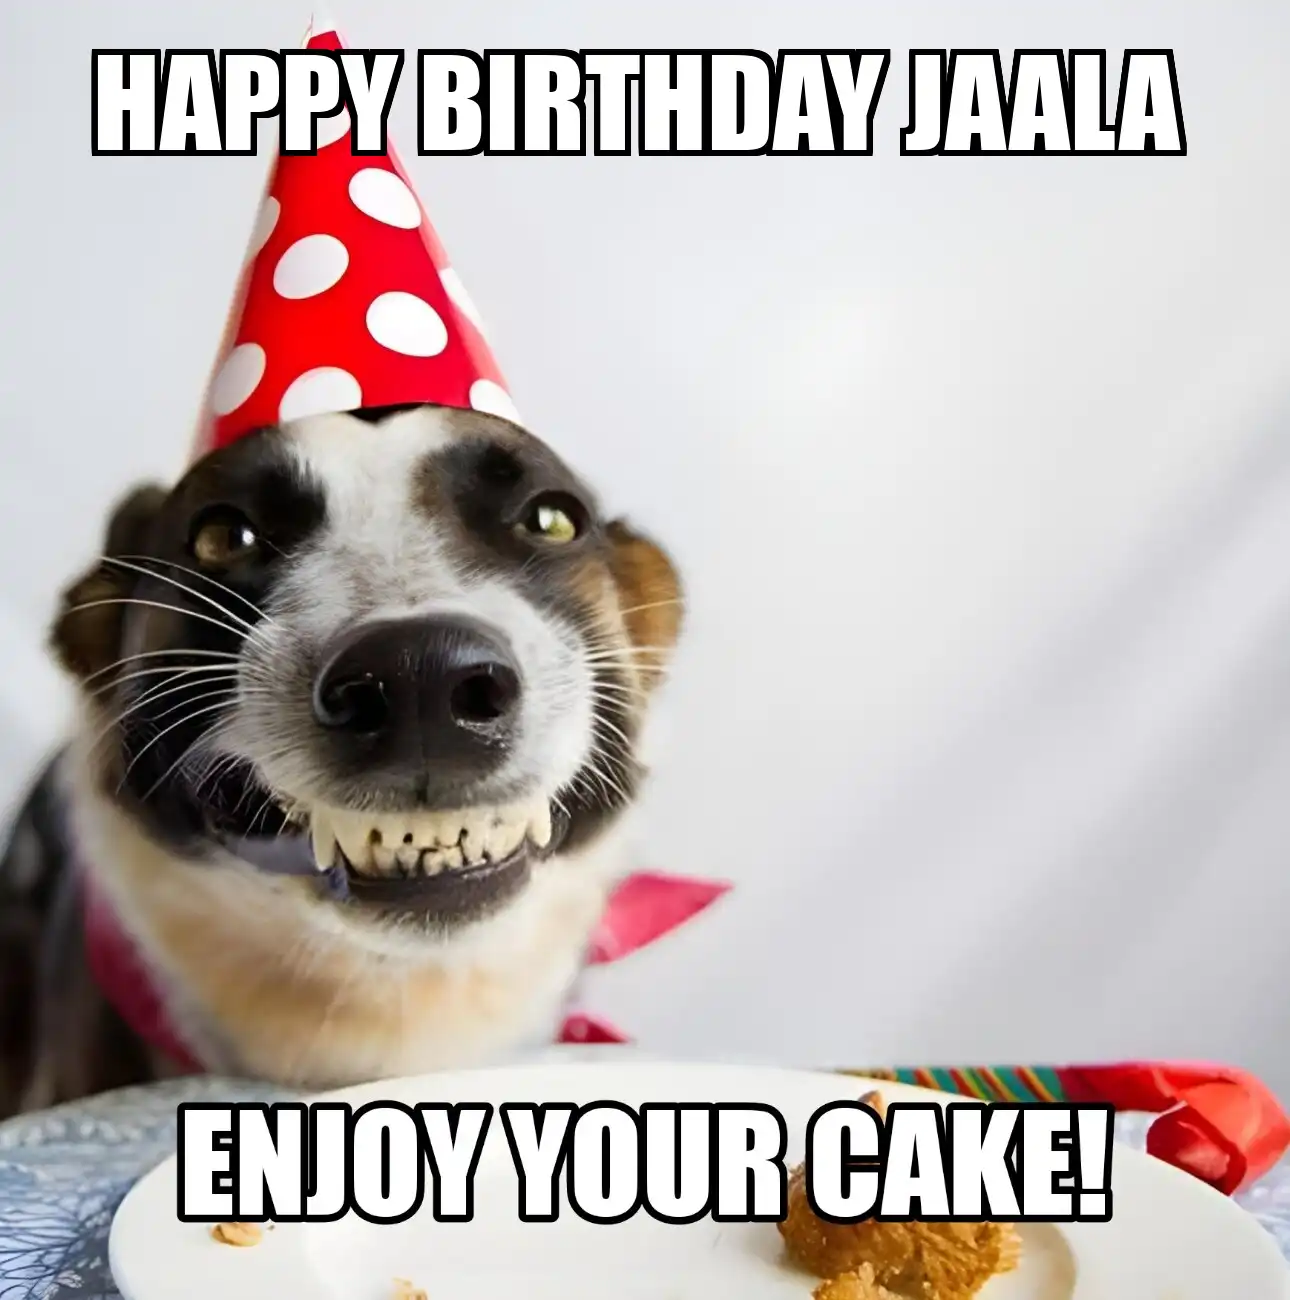 Happy Birthday Jaala Enjoy Your Cake Dog Meme